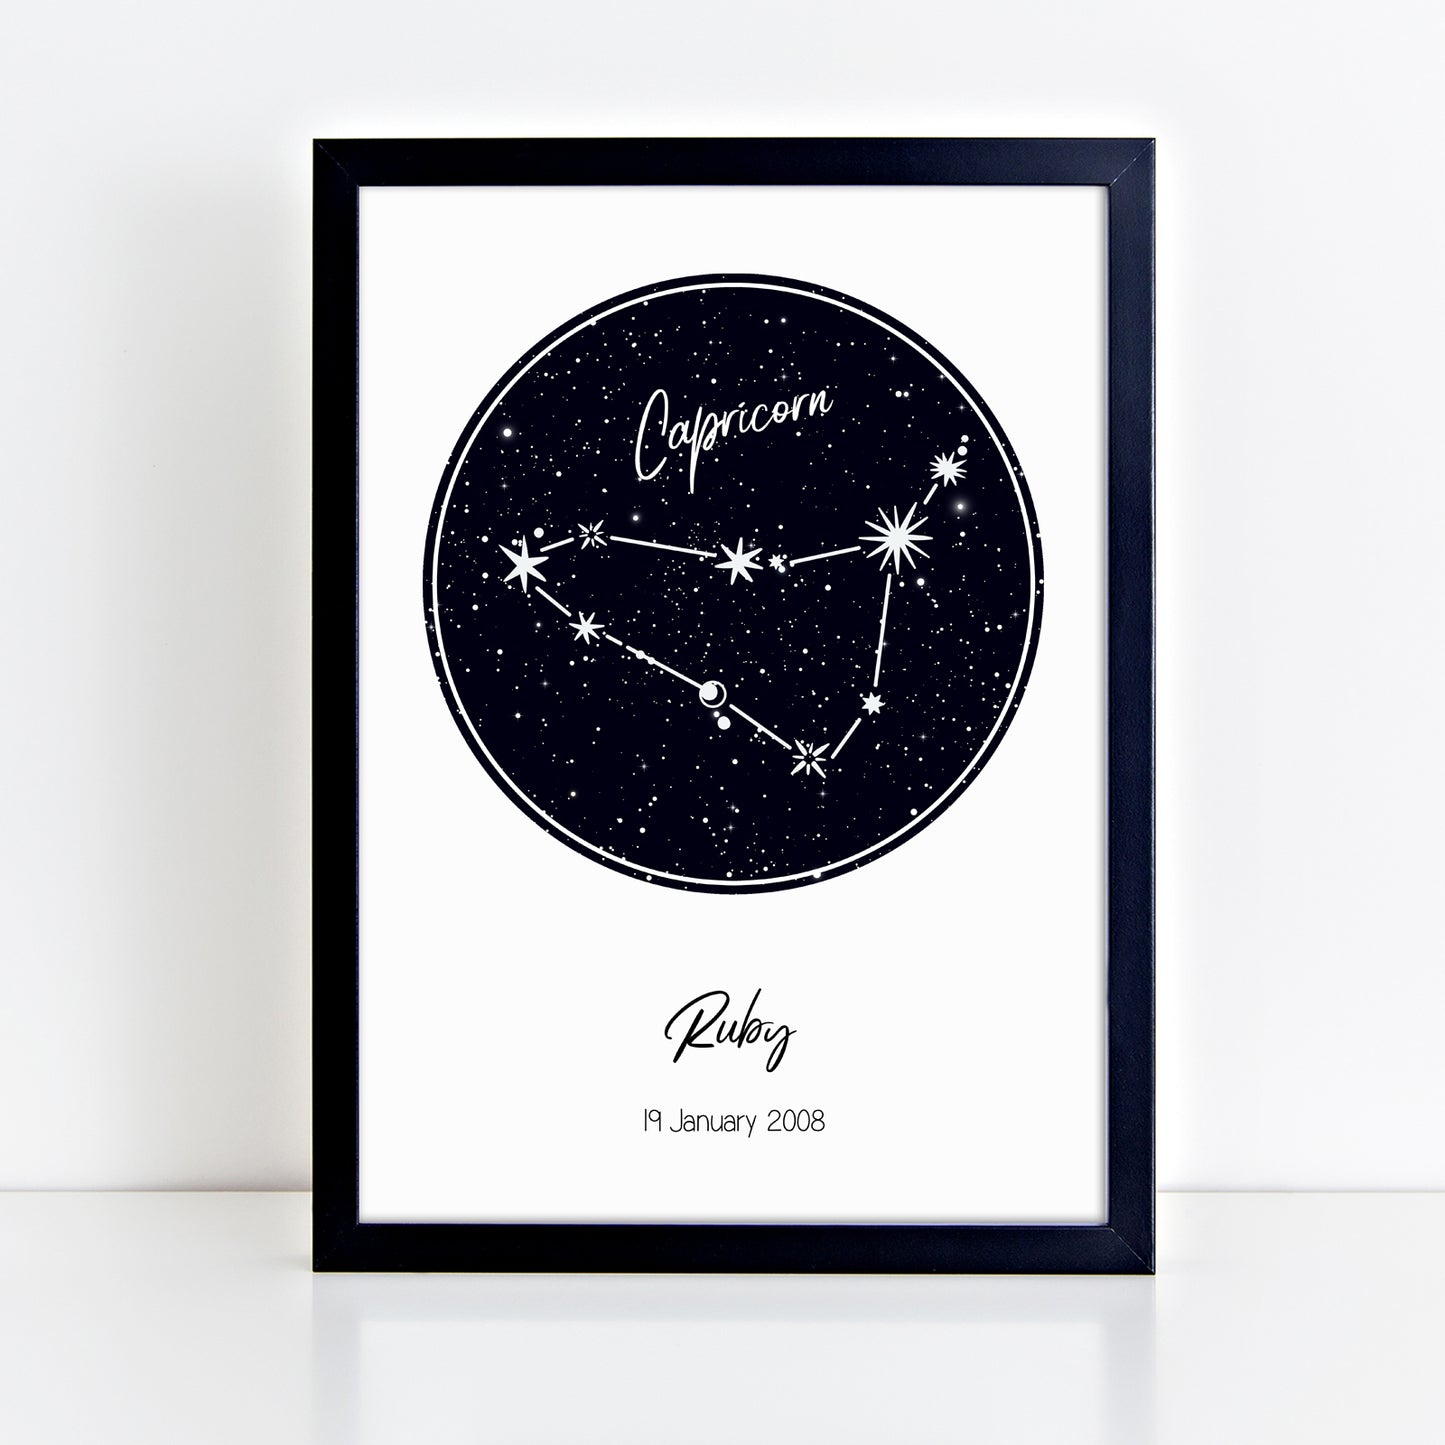 Personalised Capricorn Star Constellation Print